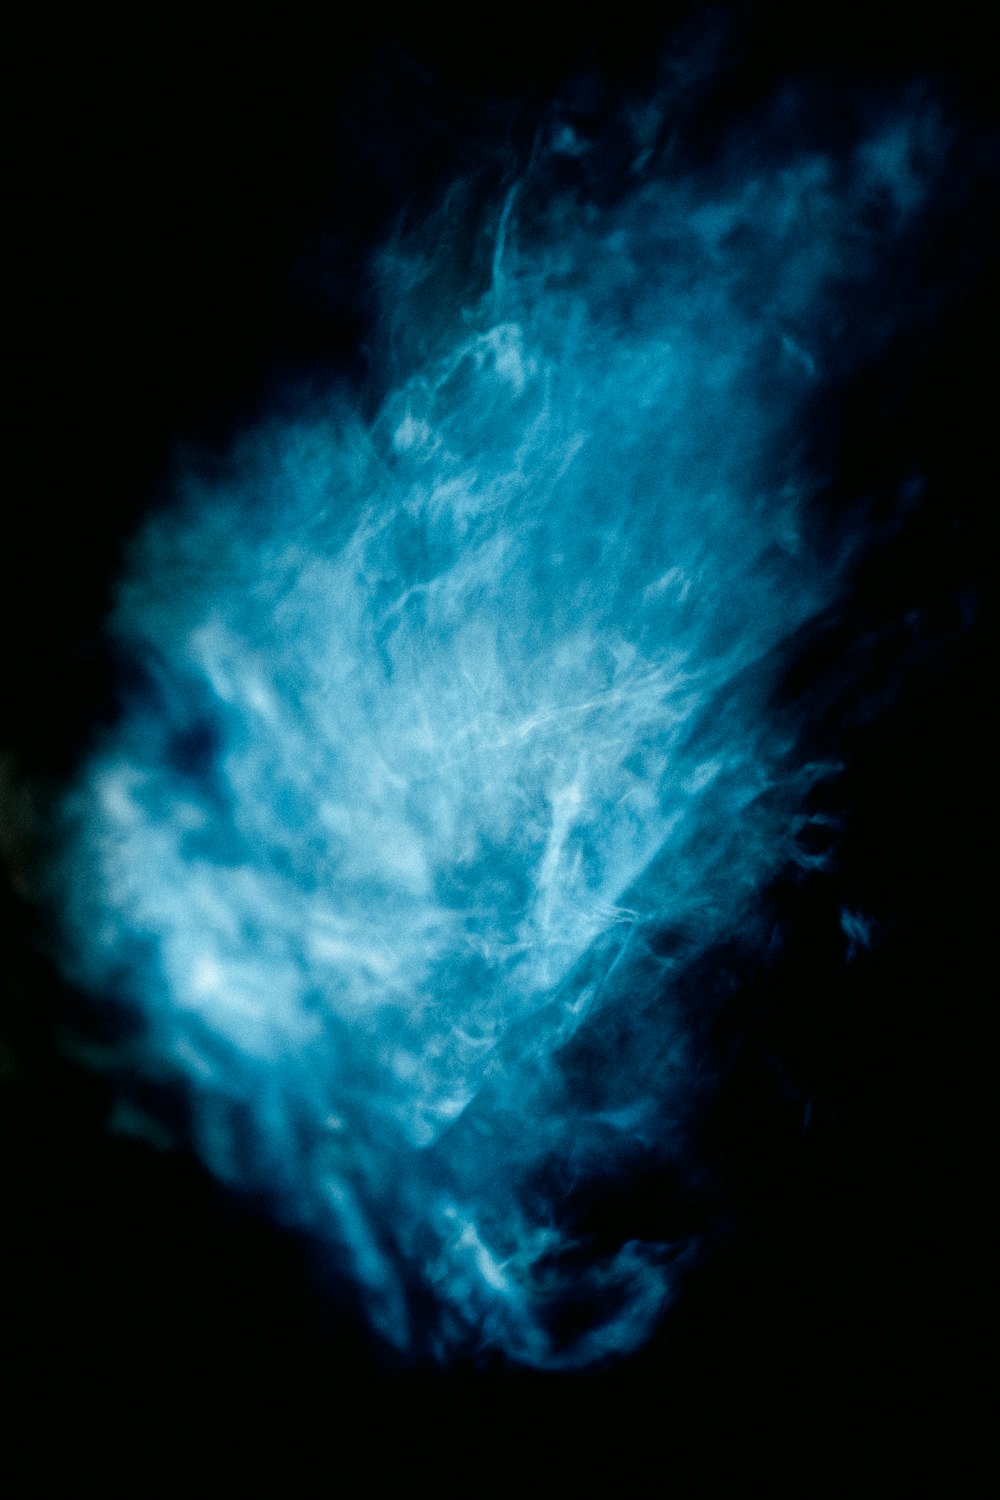 blue and white lightning on black background